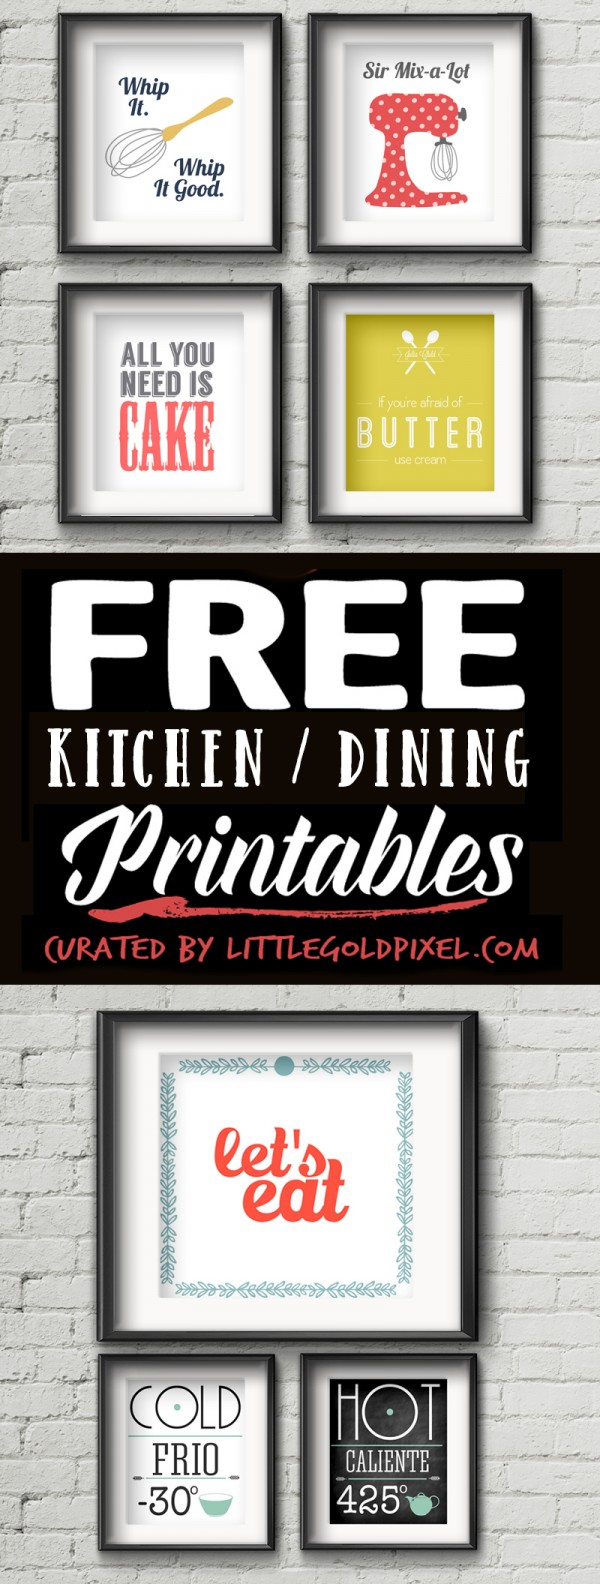 20-kitchen-free-printables-wall-art-roundup-little-gold-pixel